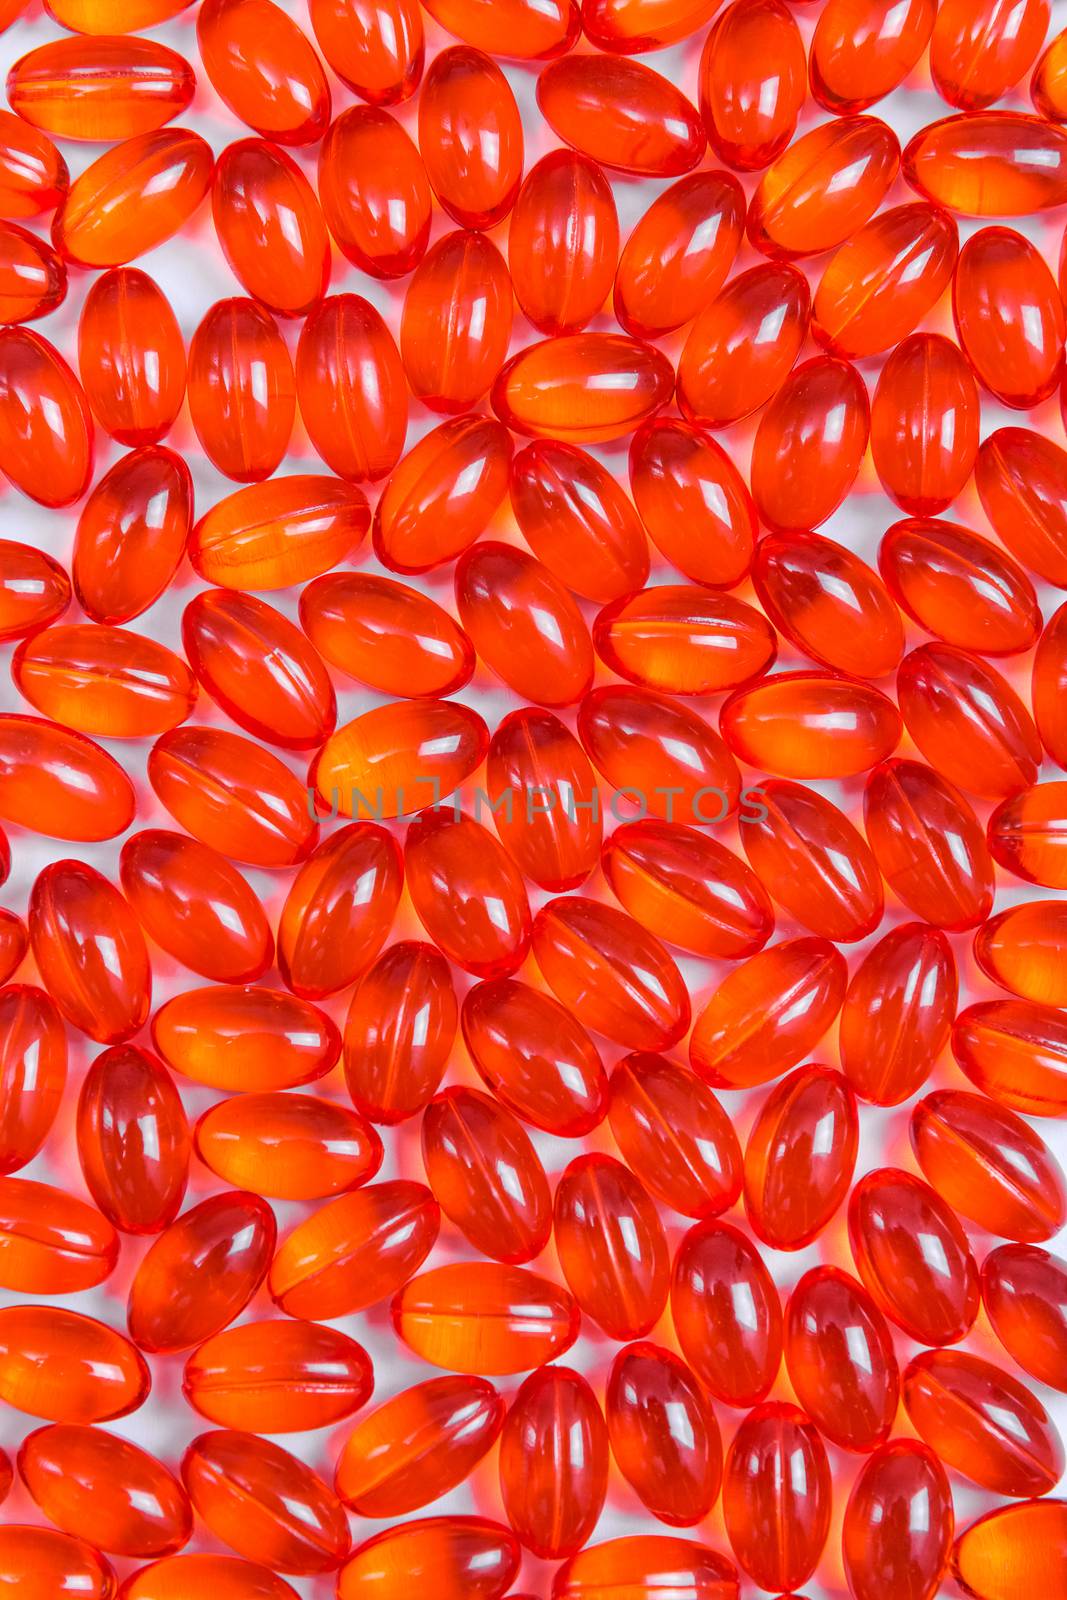 Red shiny pills background by anikasalsera